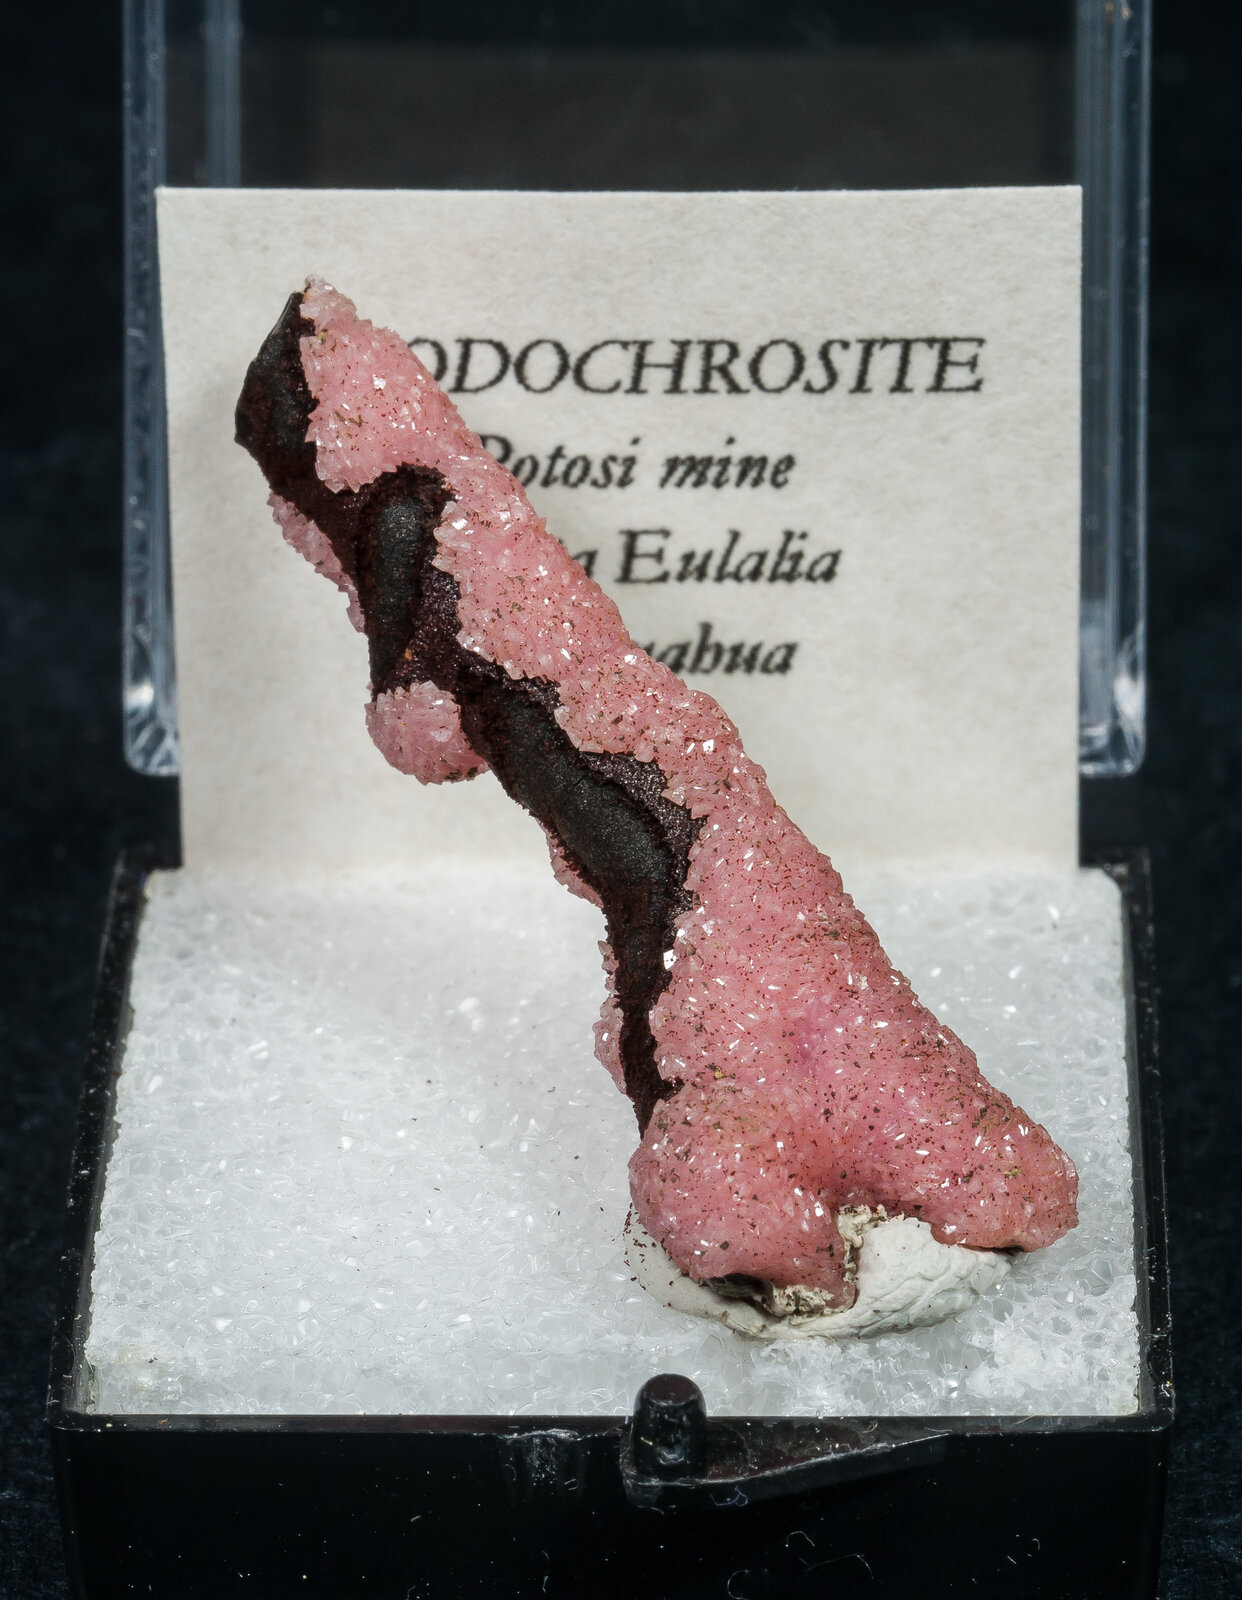 specimens/s_imagesAN7/Rhodochrosite-TXF14AN7f1.jpg